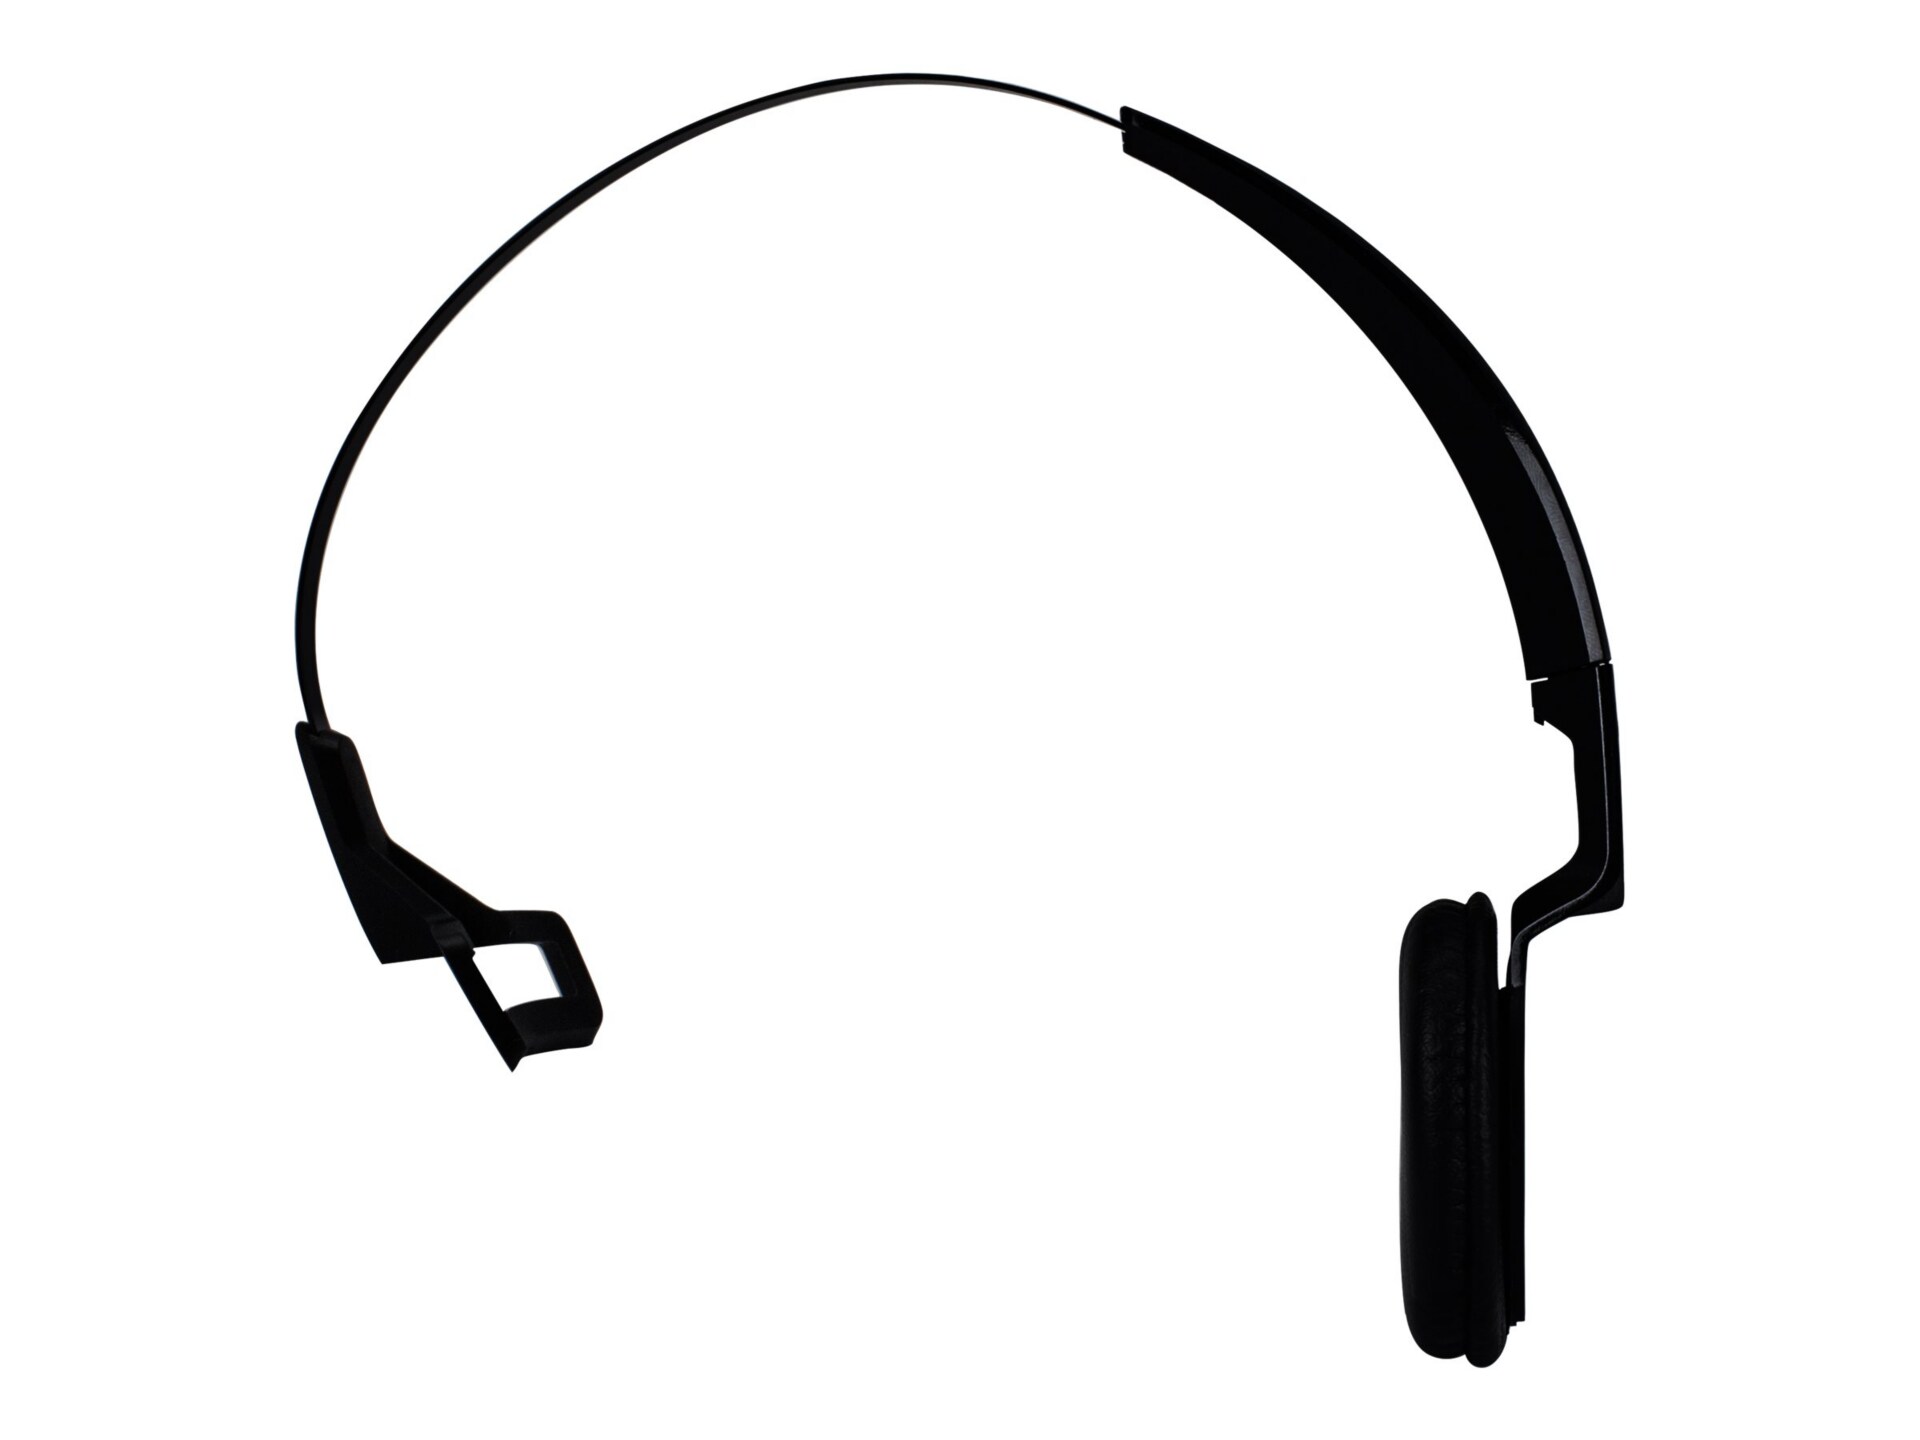 EPOS - headband for headset